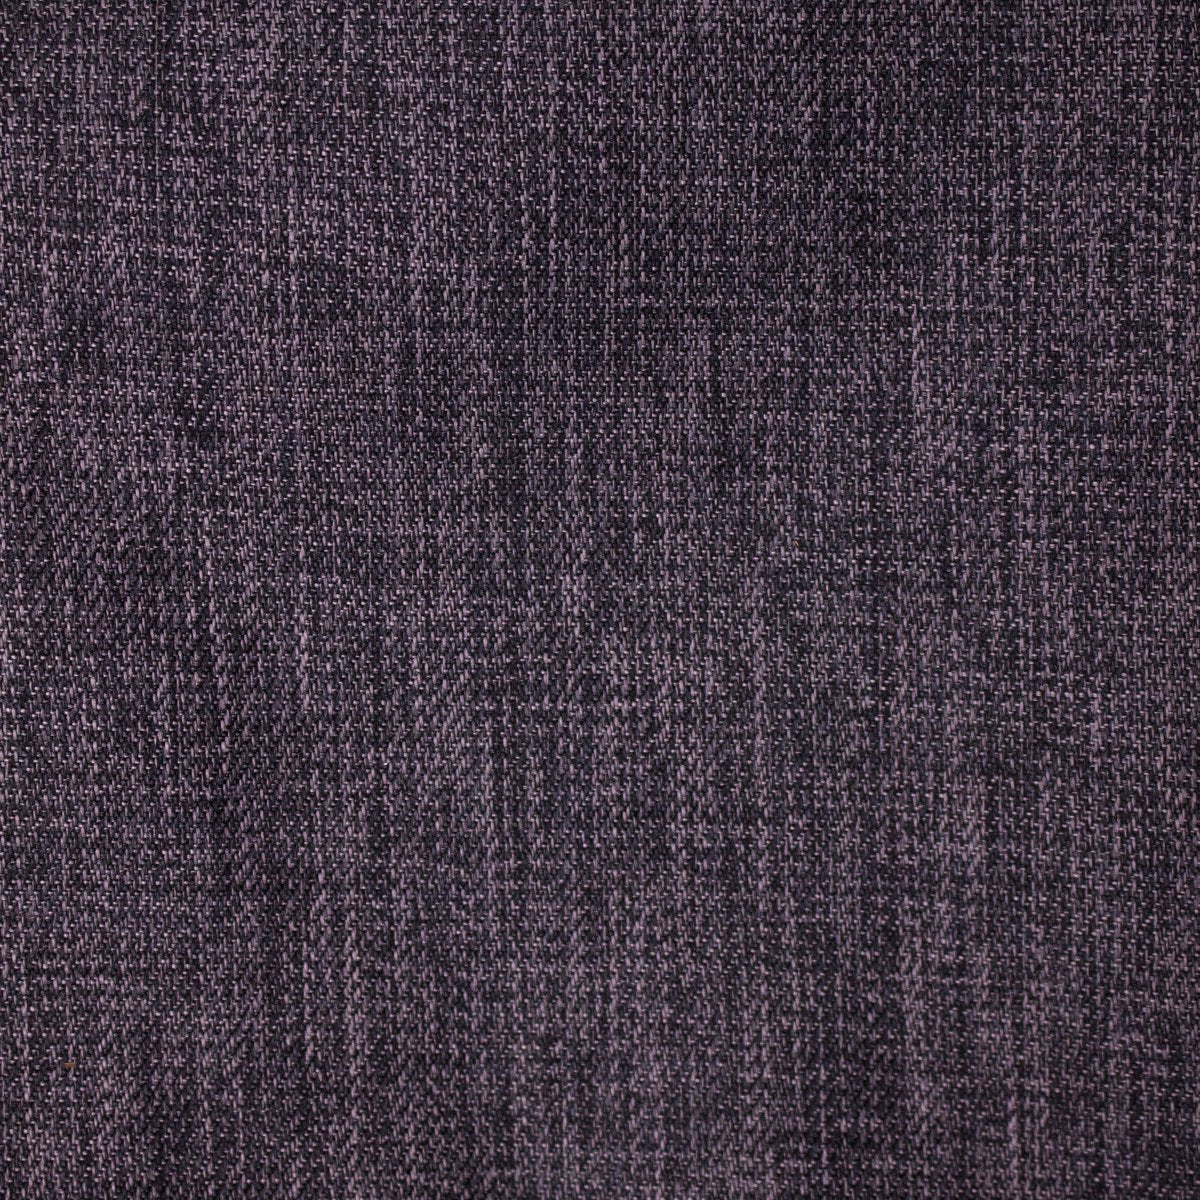 Cork & Textile Tote Vegan Handbag Burgundy / Black / Dark Blue / Gray | THE CORK COLLECTION